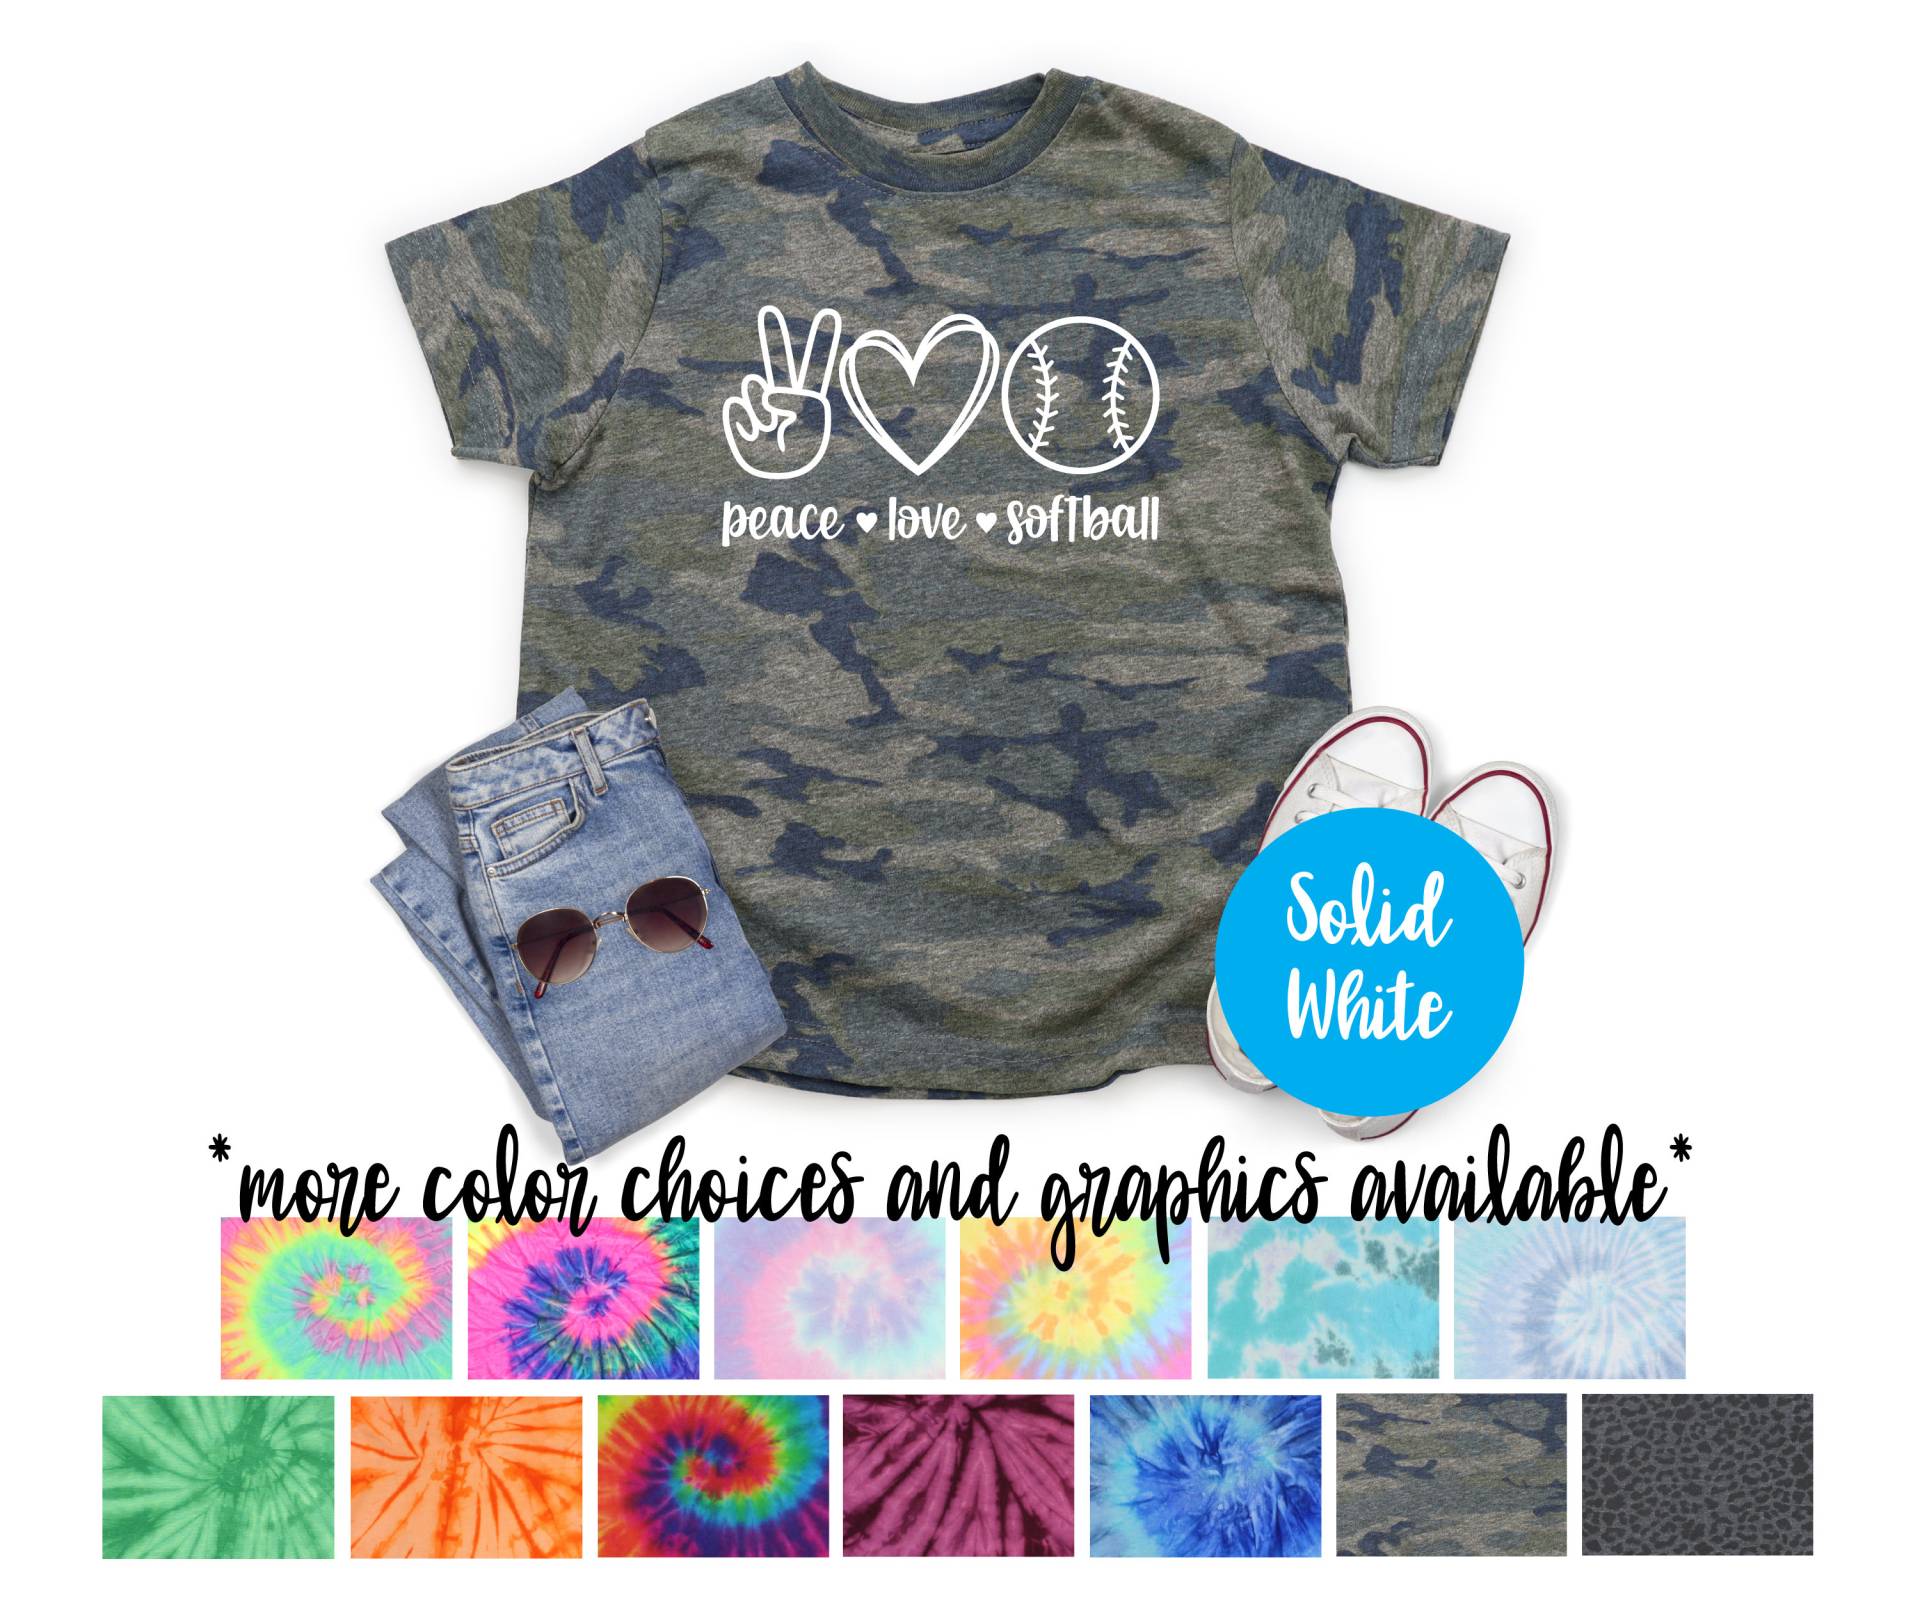 Peace Love Softball Camo Shirt Solides Weißes Vinyl Camouflage Girl Fan von TwoDreamsShop